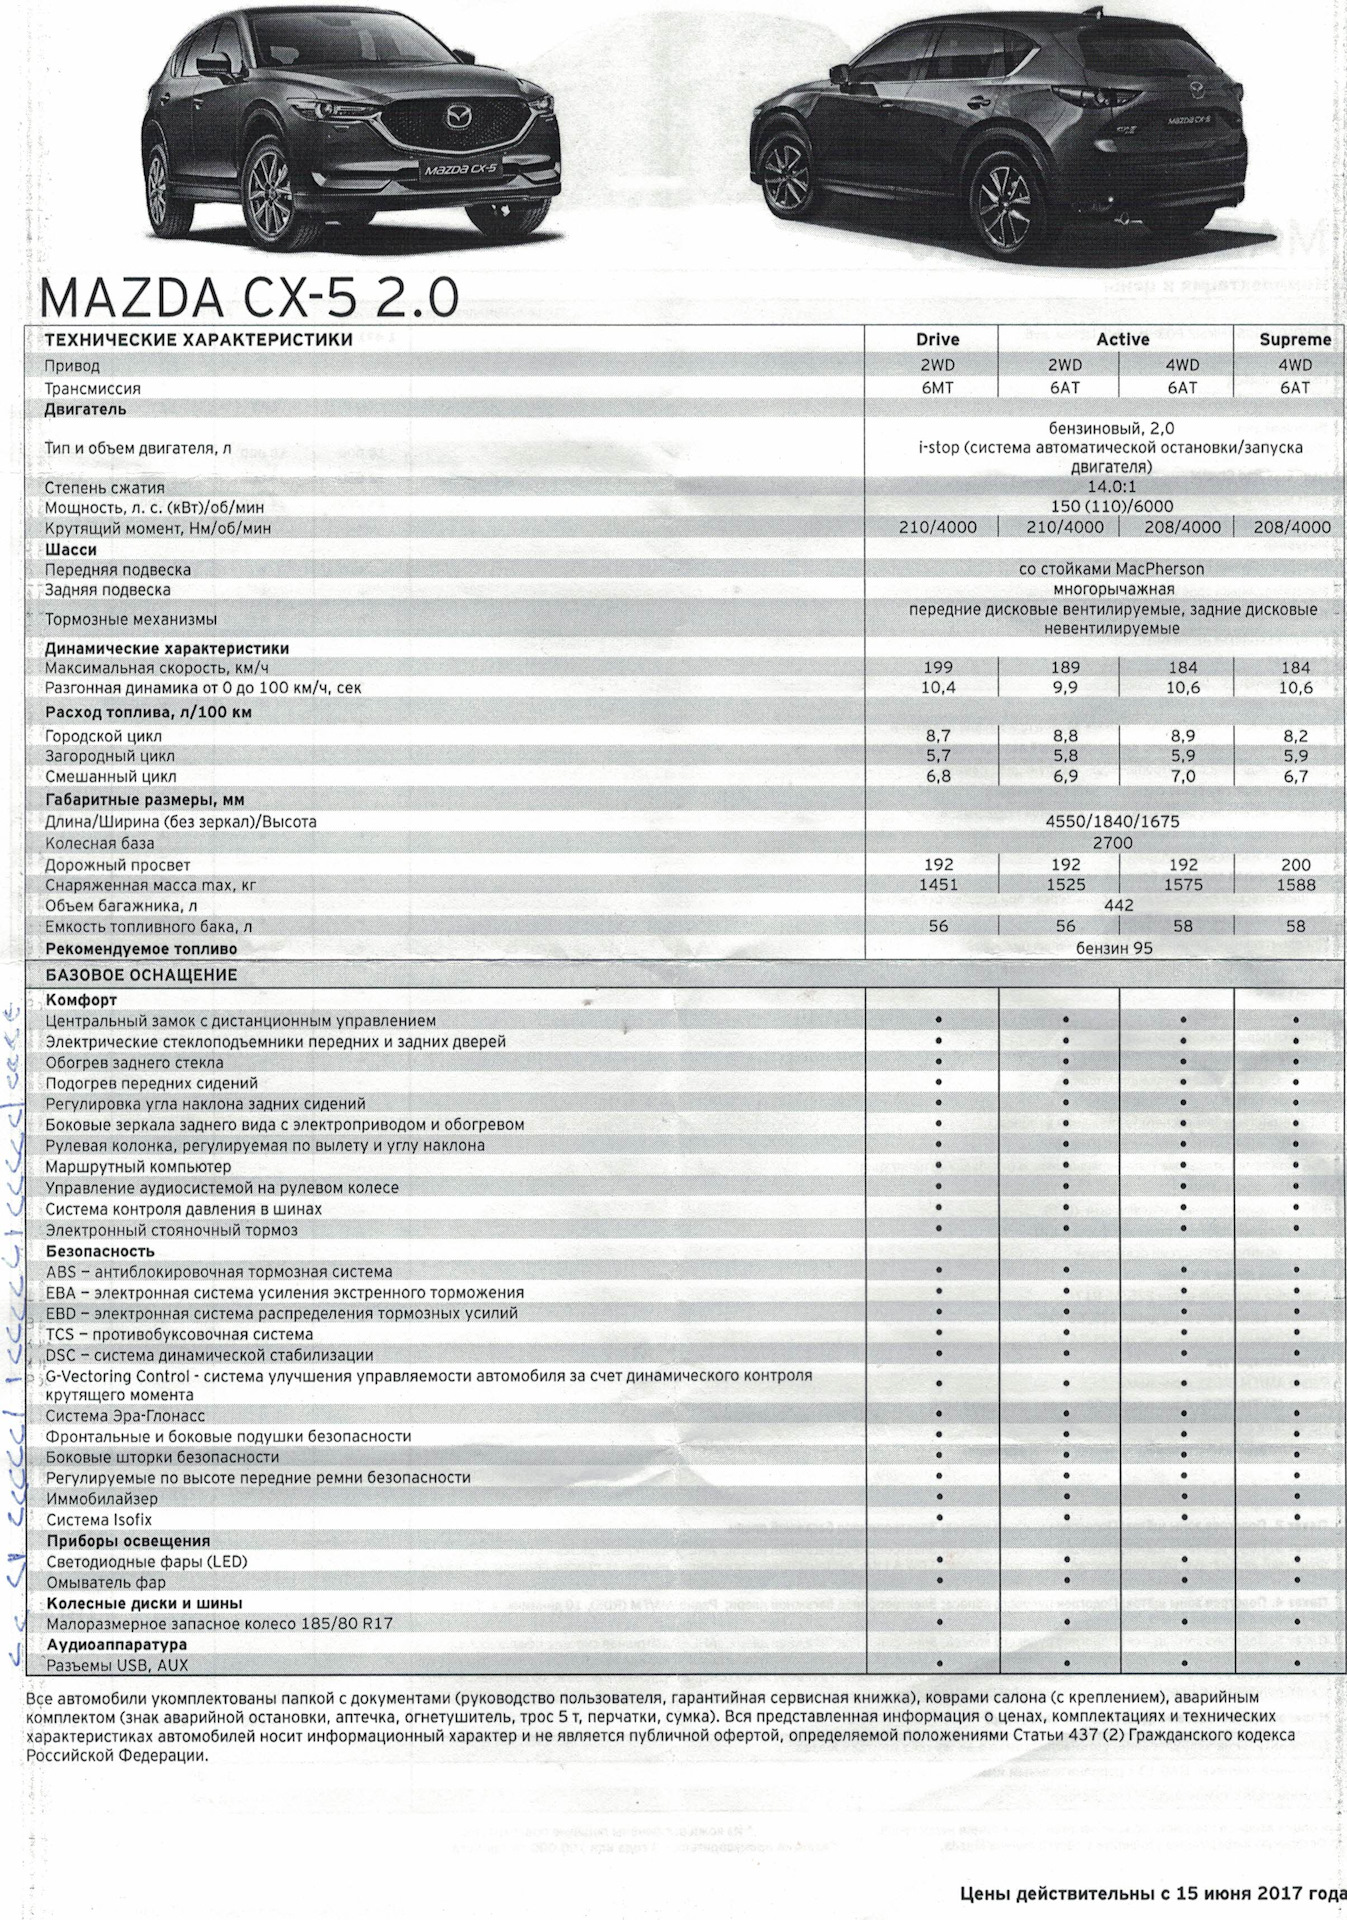 Мазда сх5 сколько литров. Колесная база cx5. Mazda CX 5 комплектации таблица. Мазда cx5 характеристики. Мазда СХ-5 технические характеристики 2021.